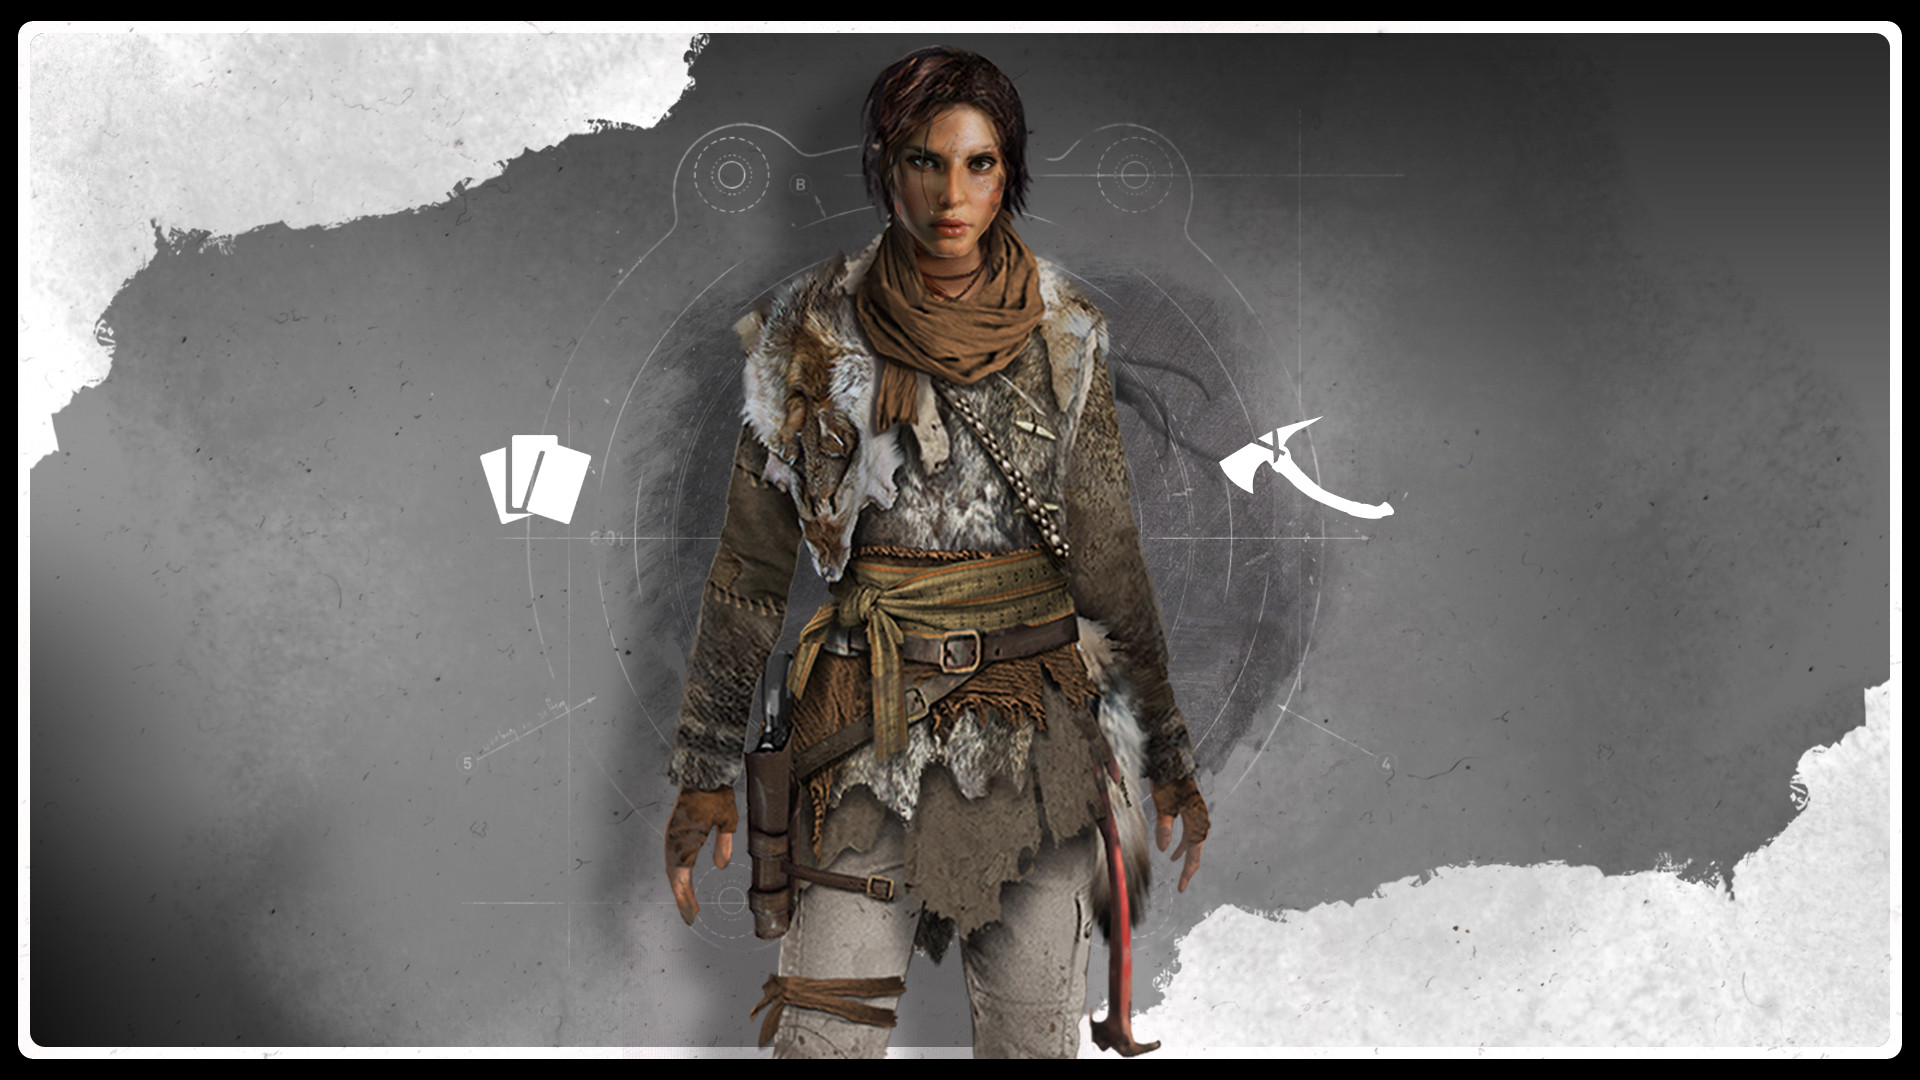 [$ 2.93] Rise of the Tomb Raider - Wilderness Survivor Pack DLC Steam CD Key